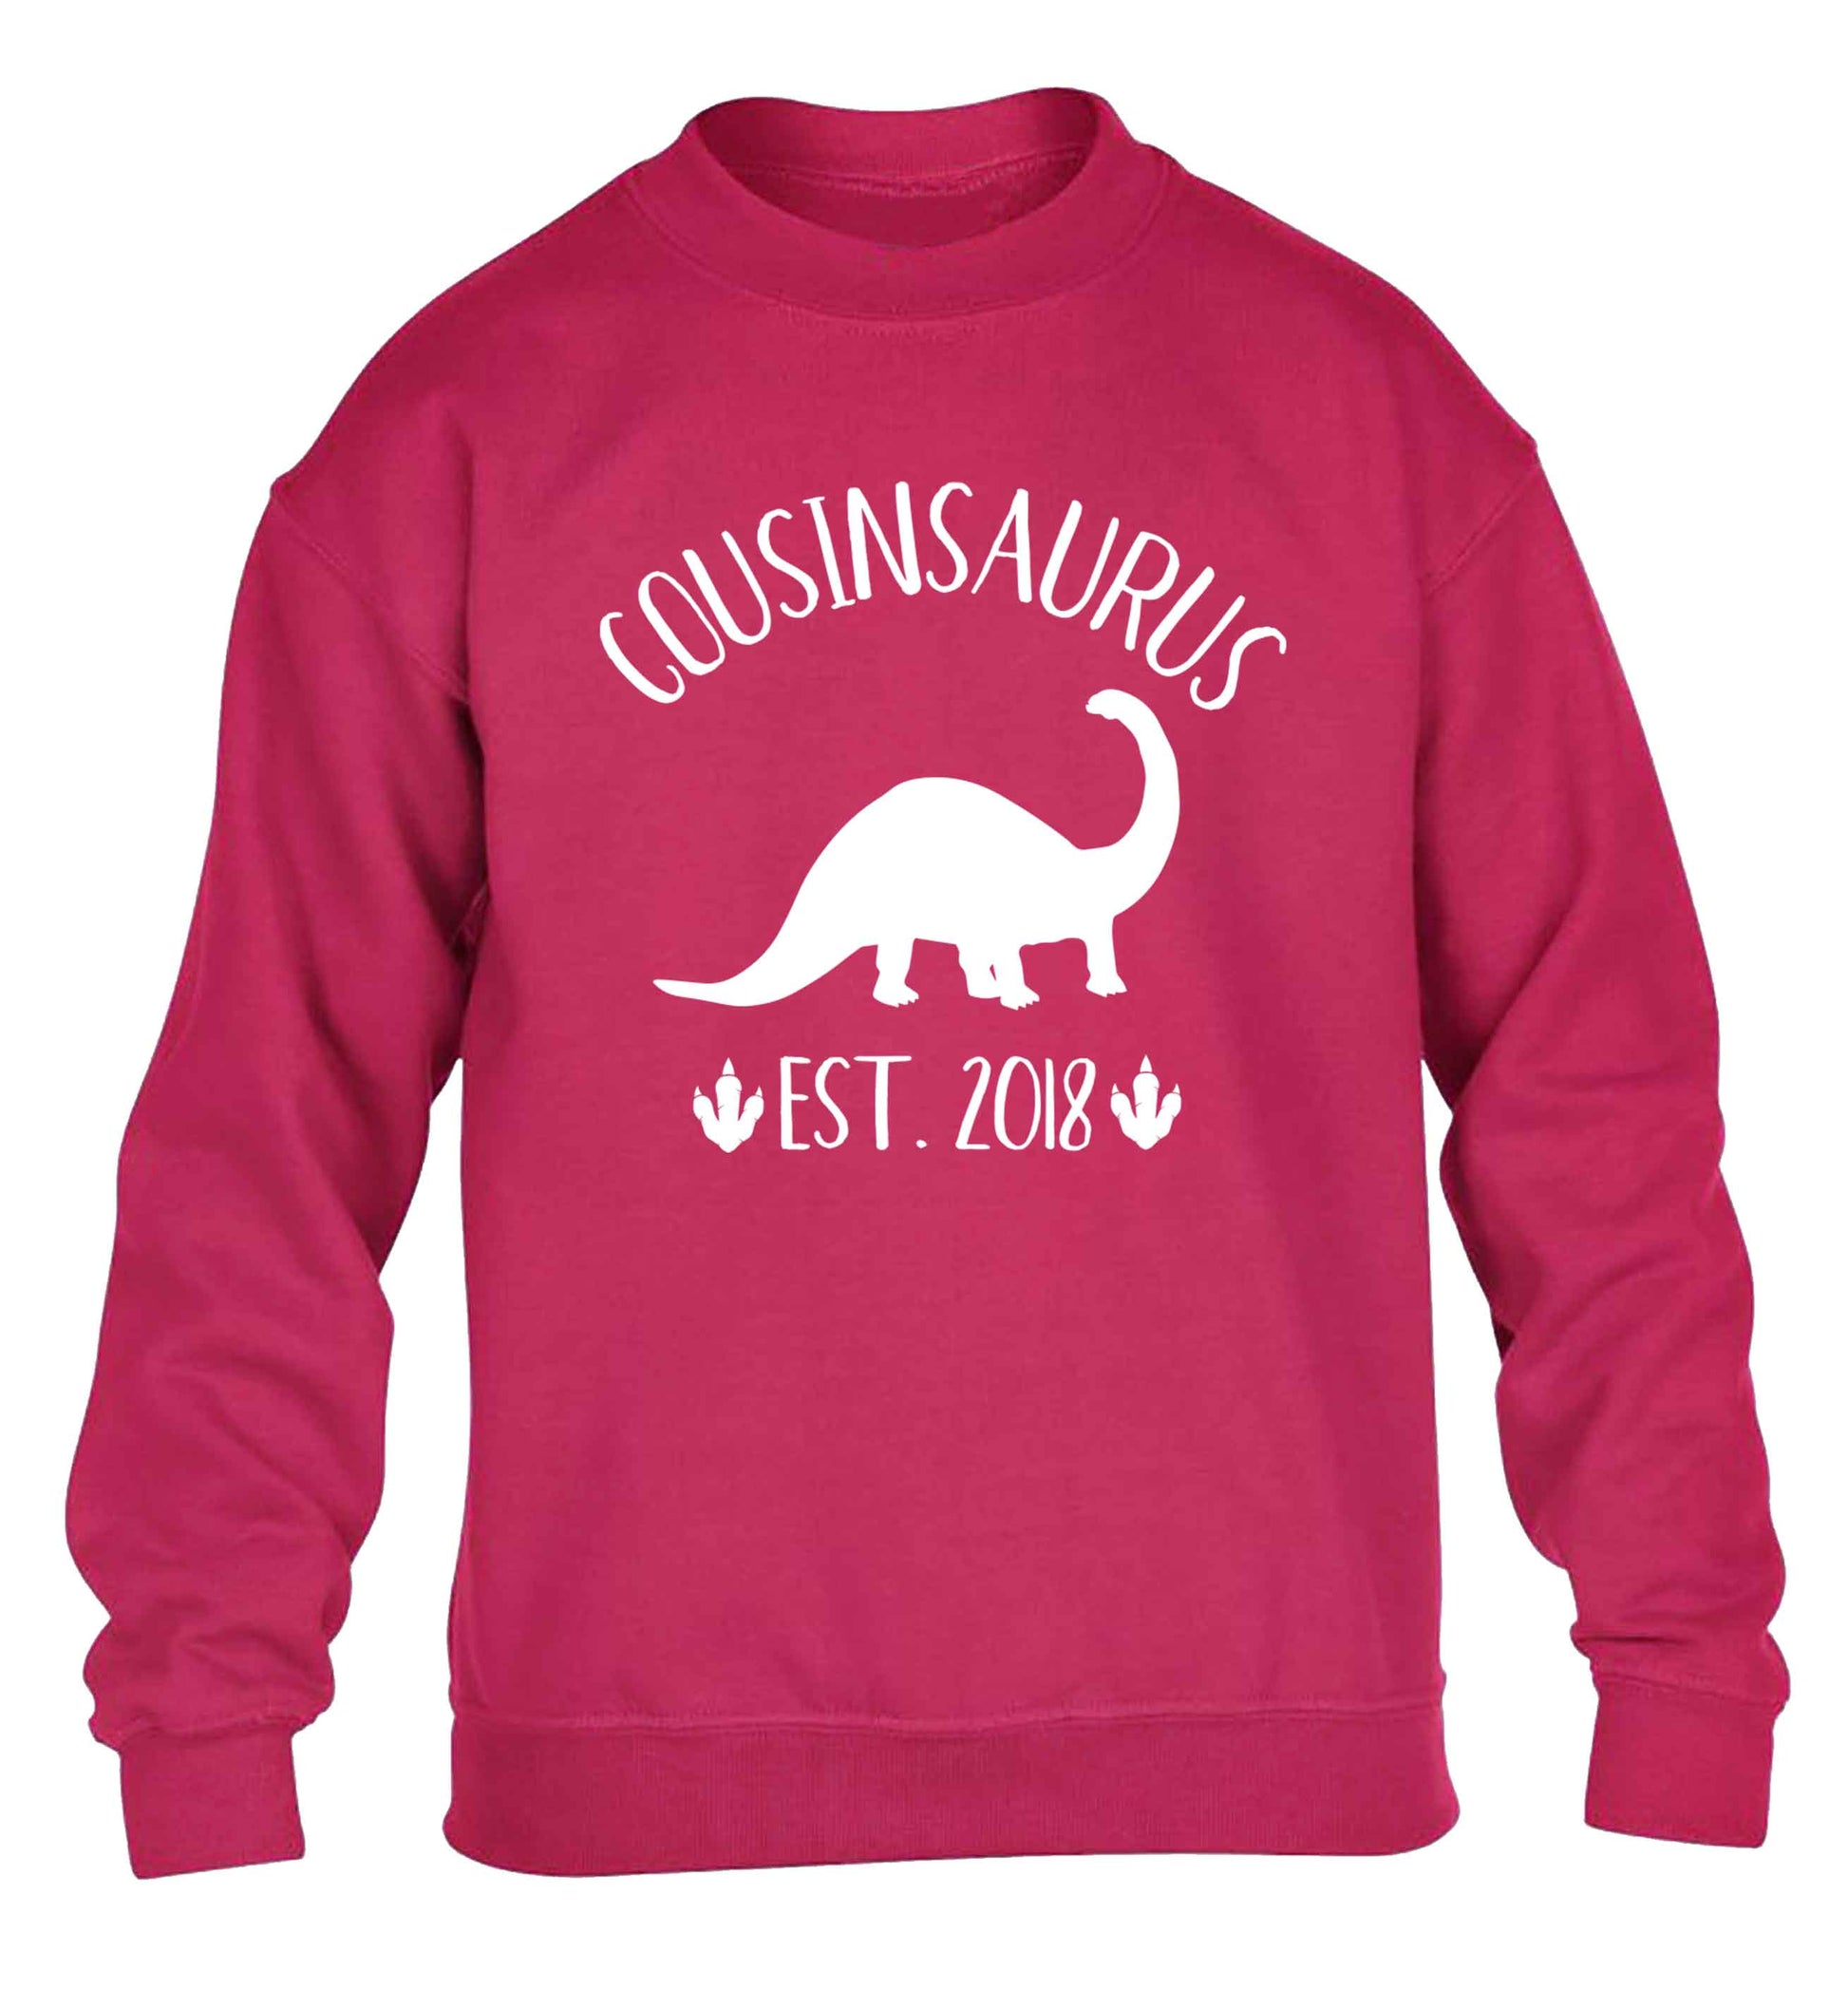 Personalised cousinsaurus since (custom date) children's pink sweater 12-13 Years